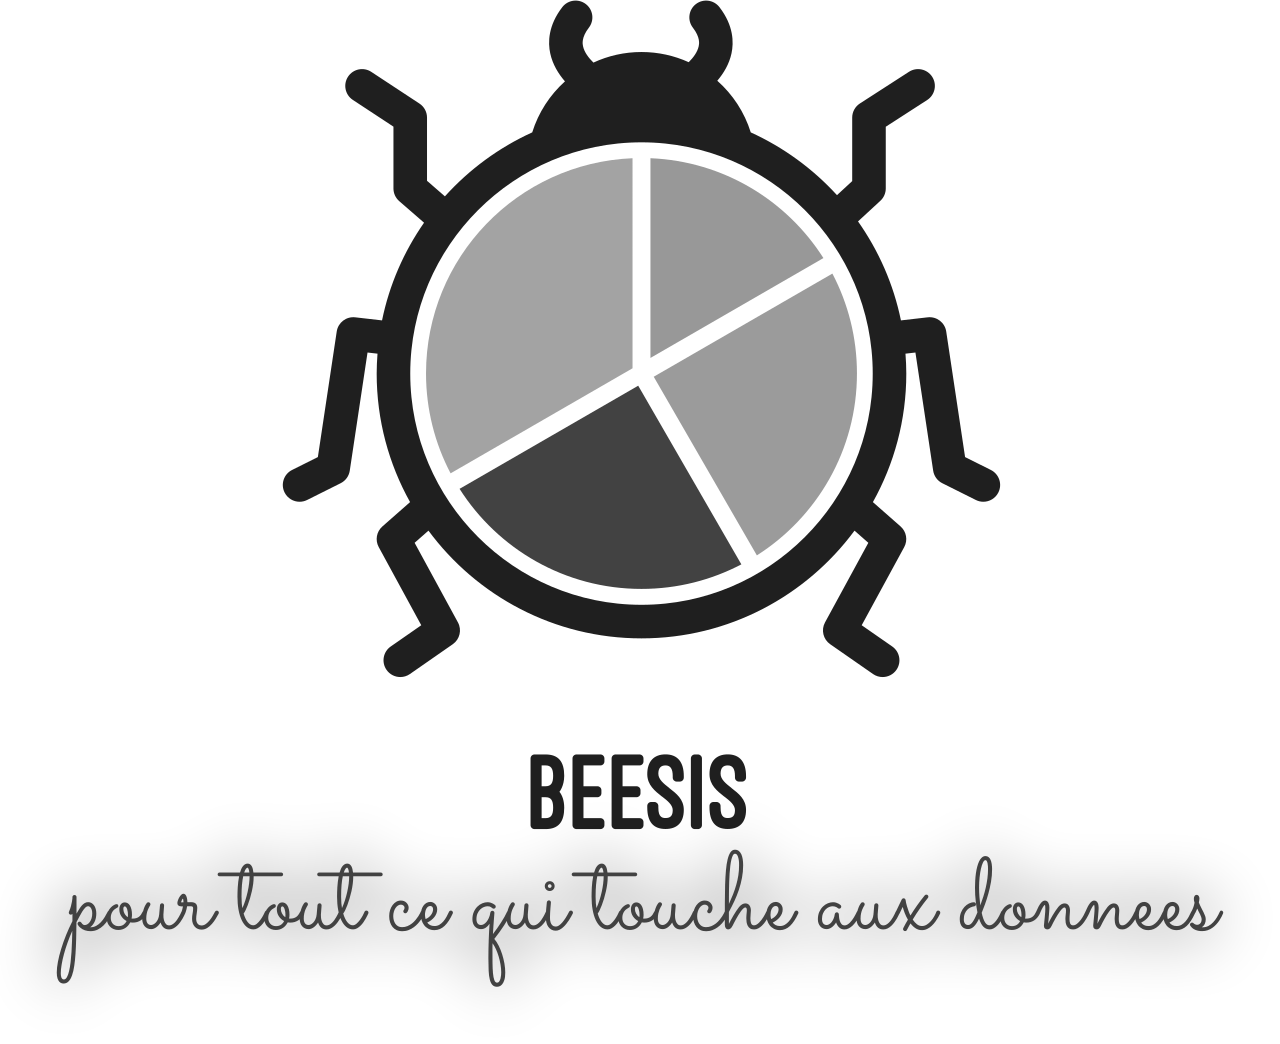 BEESIS's logo